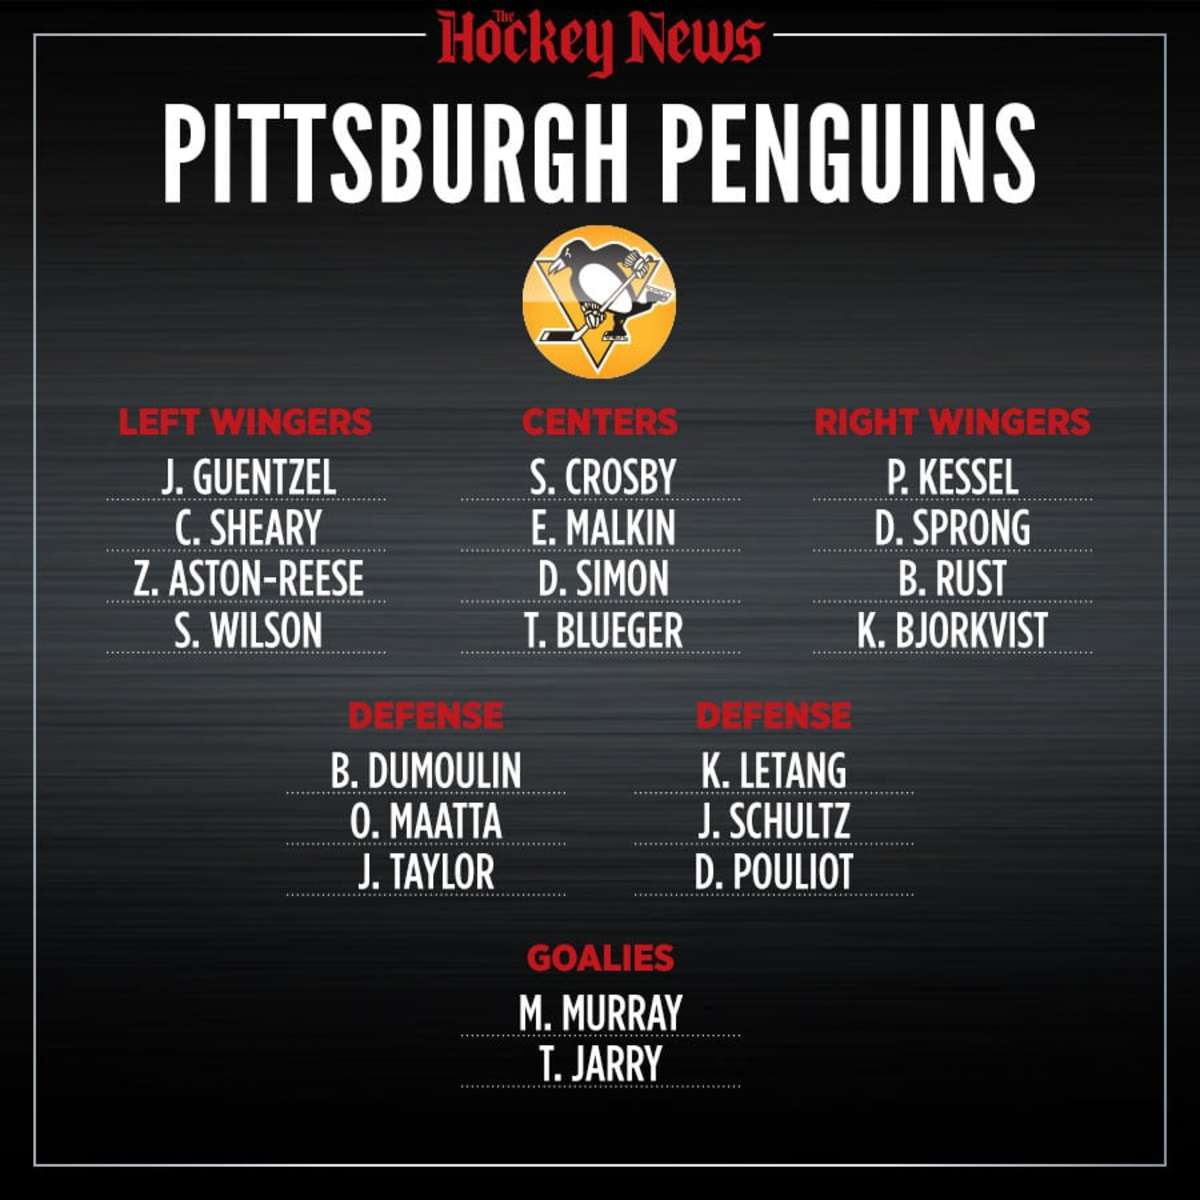 Pittsburgh Penguins Depth Chart